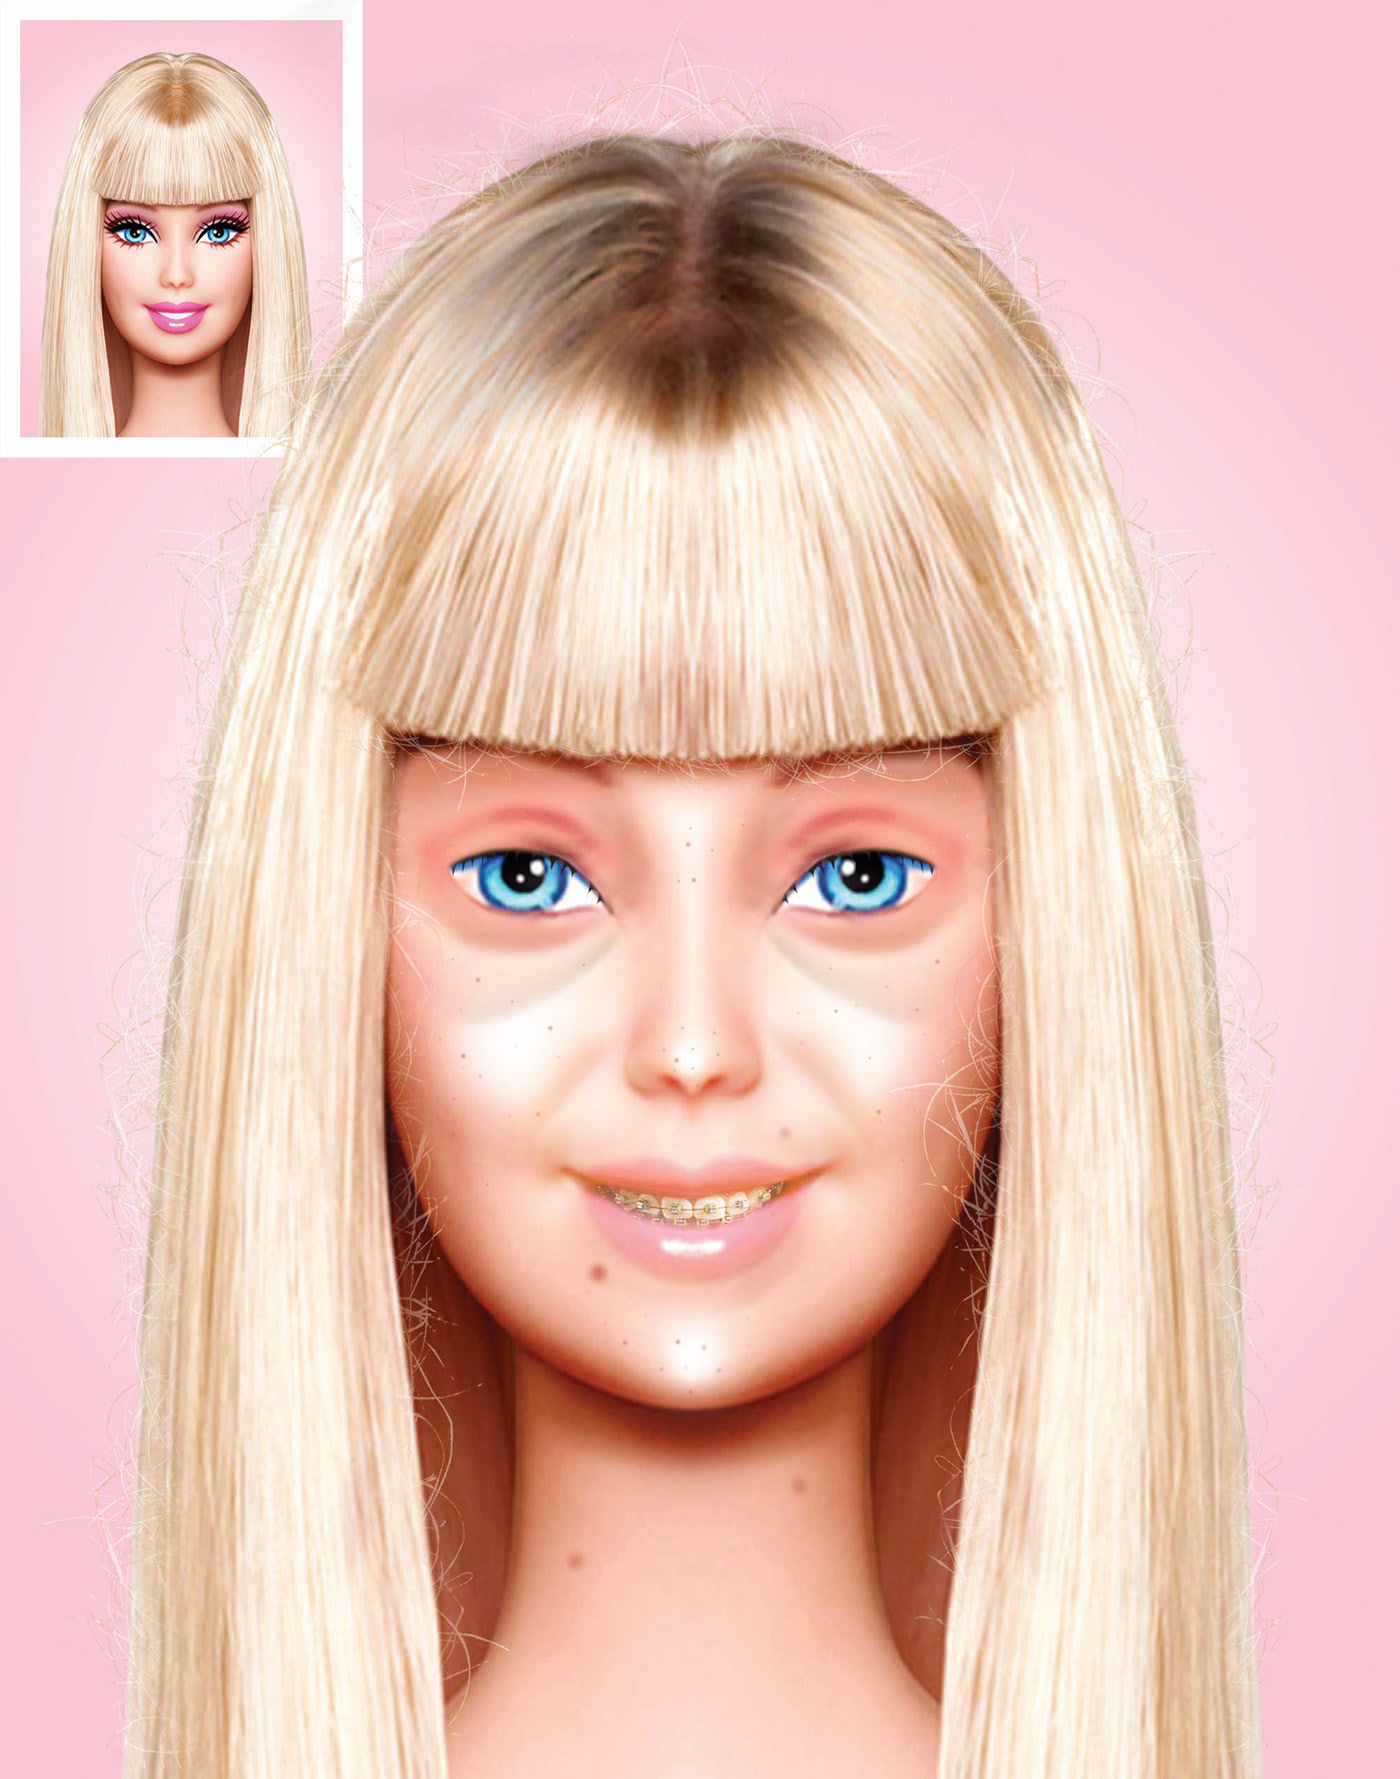 Barbie no makeup. 